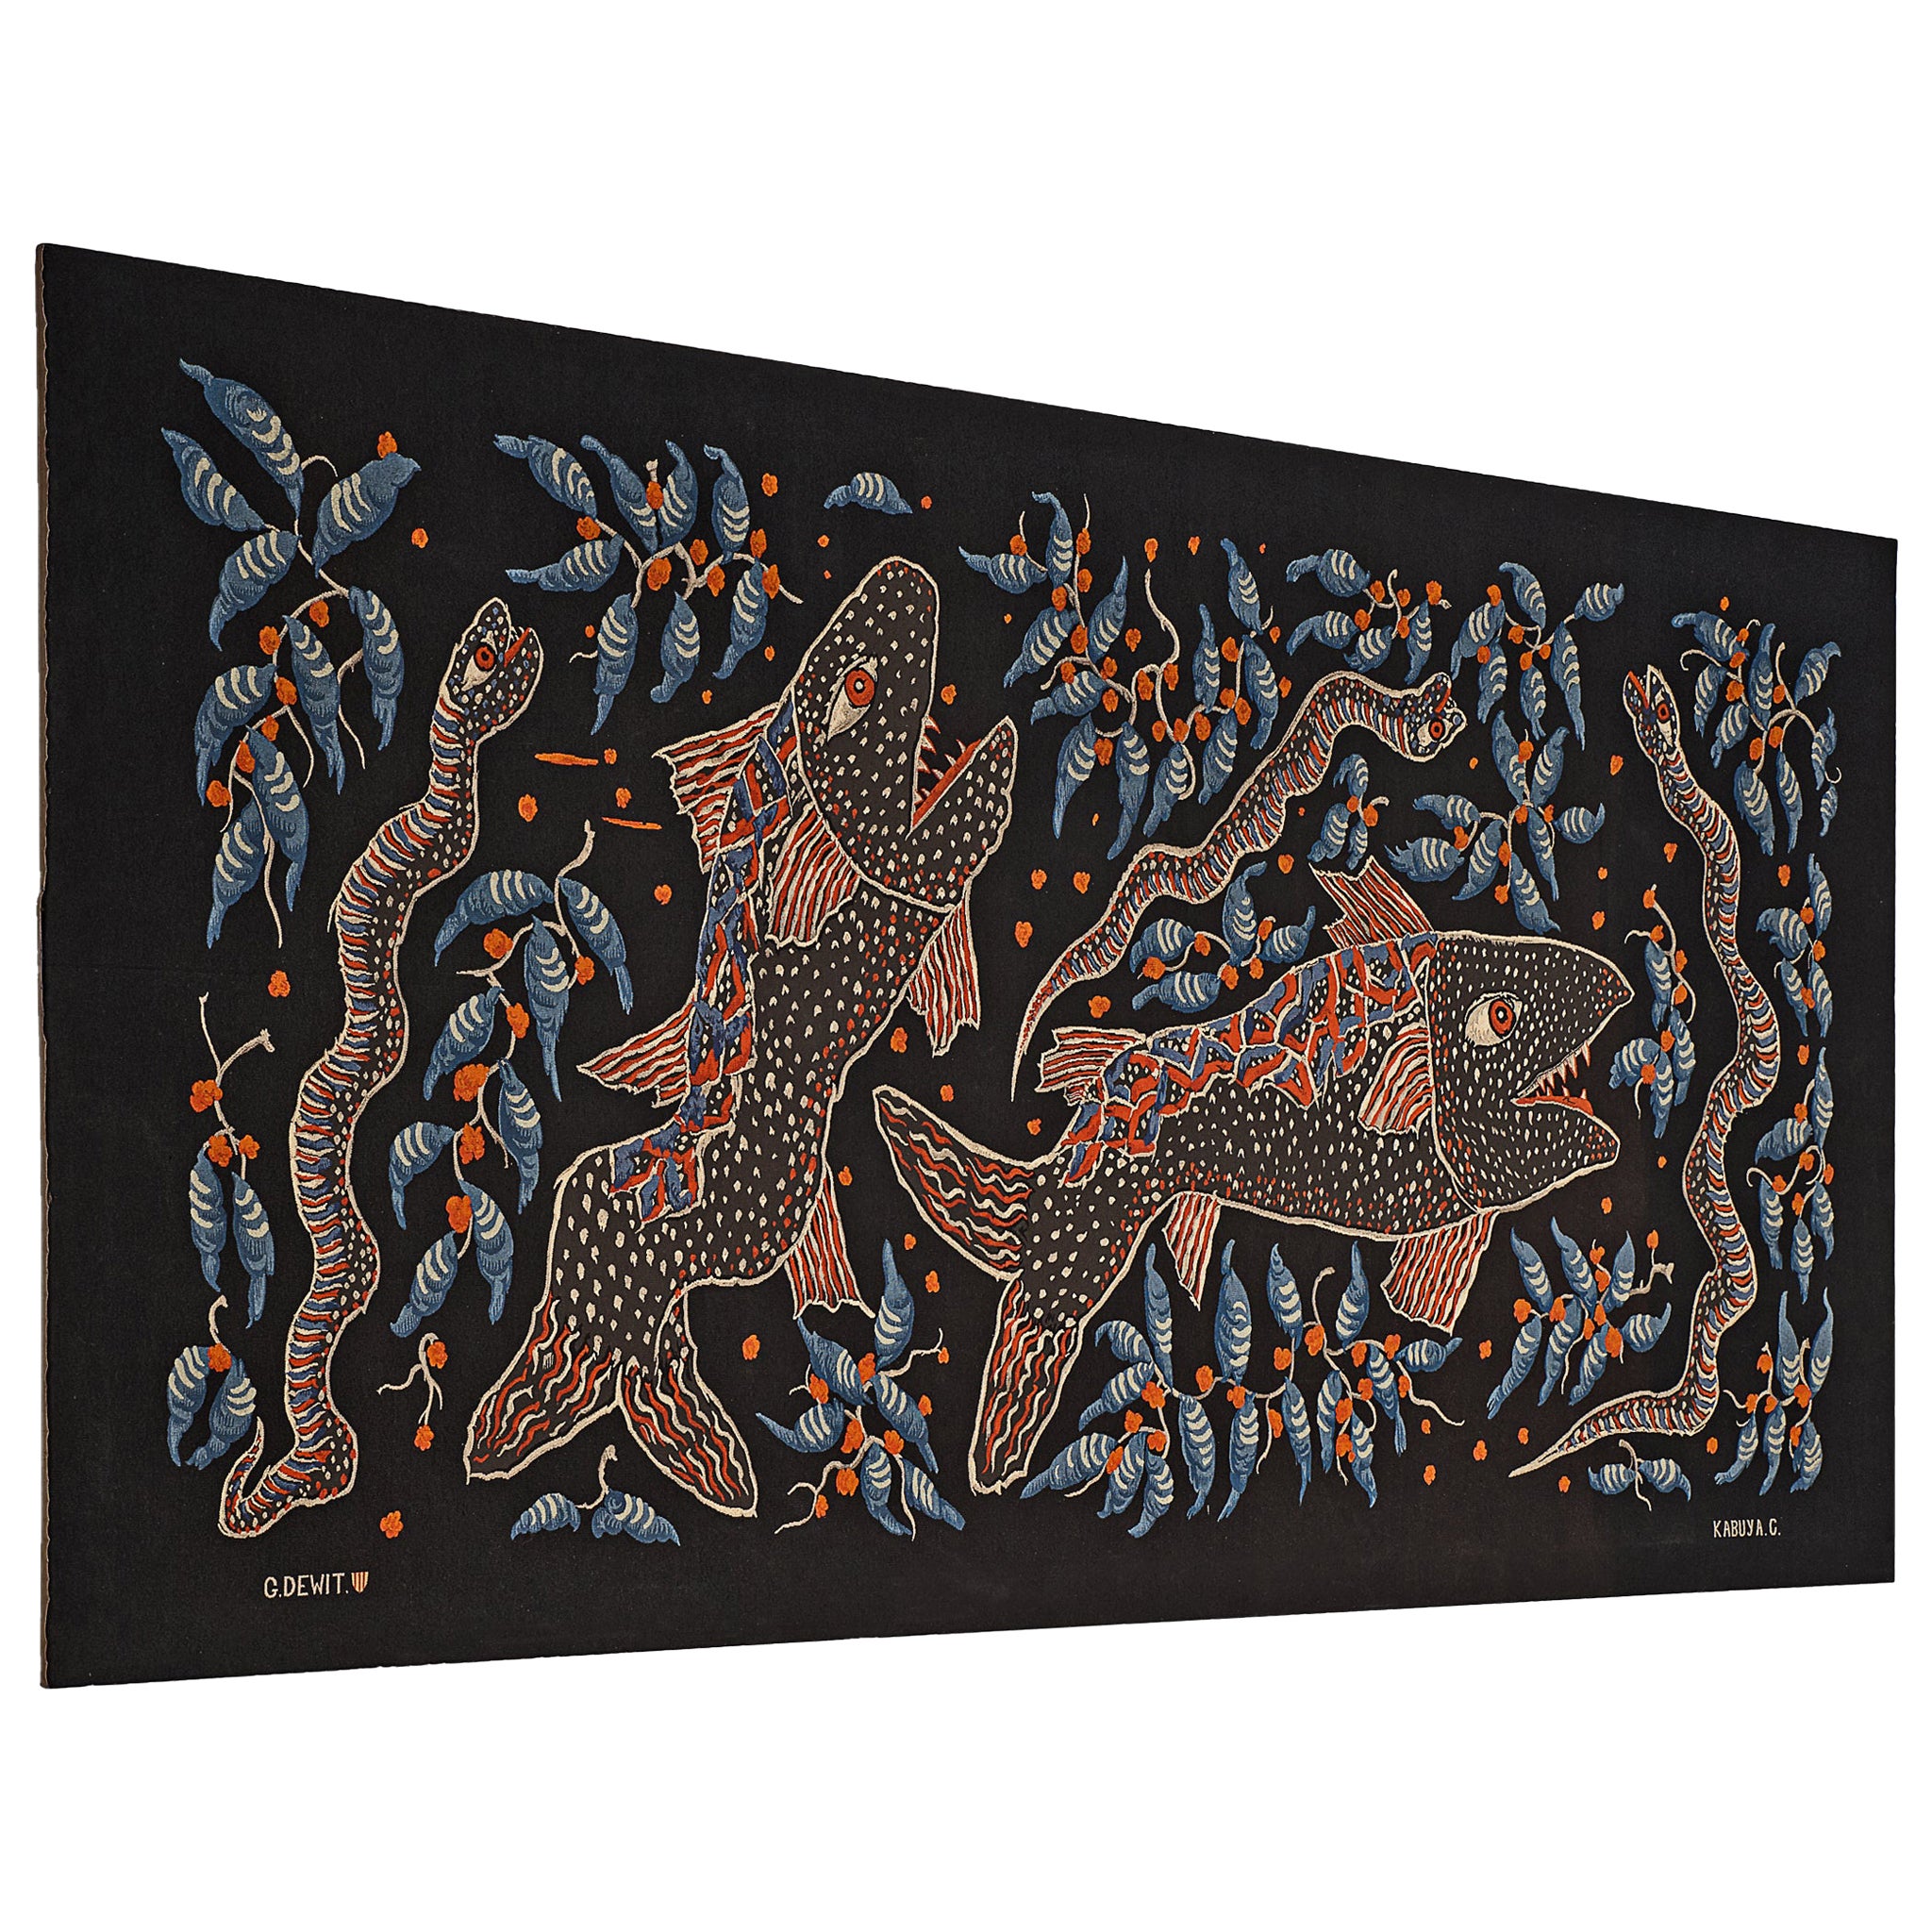 Celestin Kabuya Grand Wall Tapestry